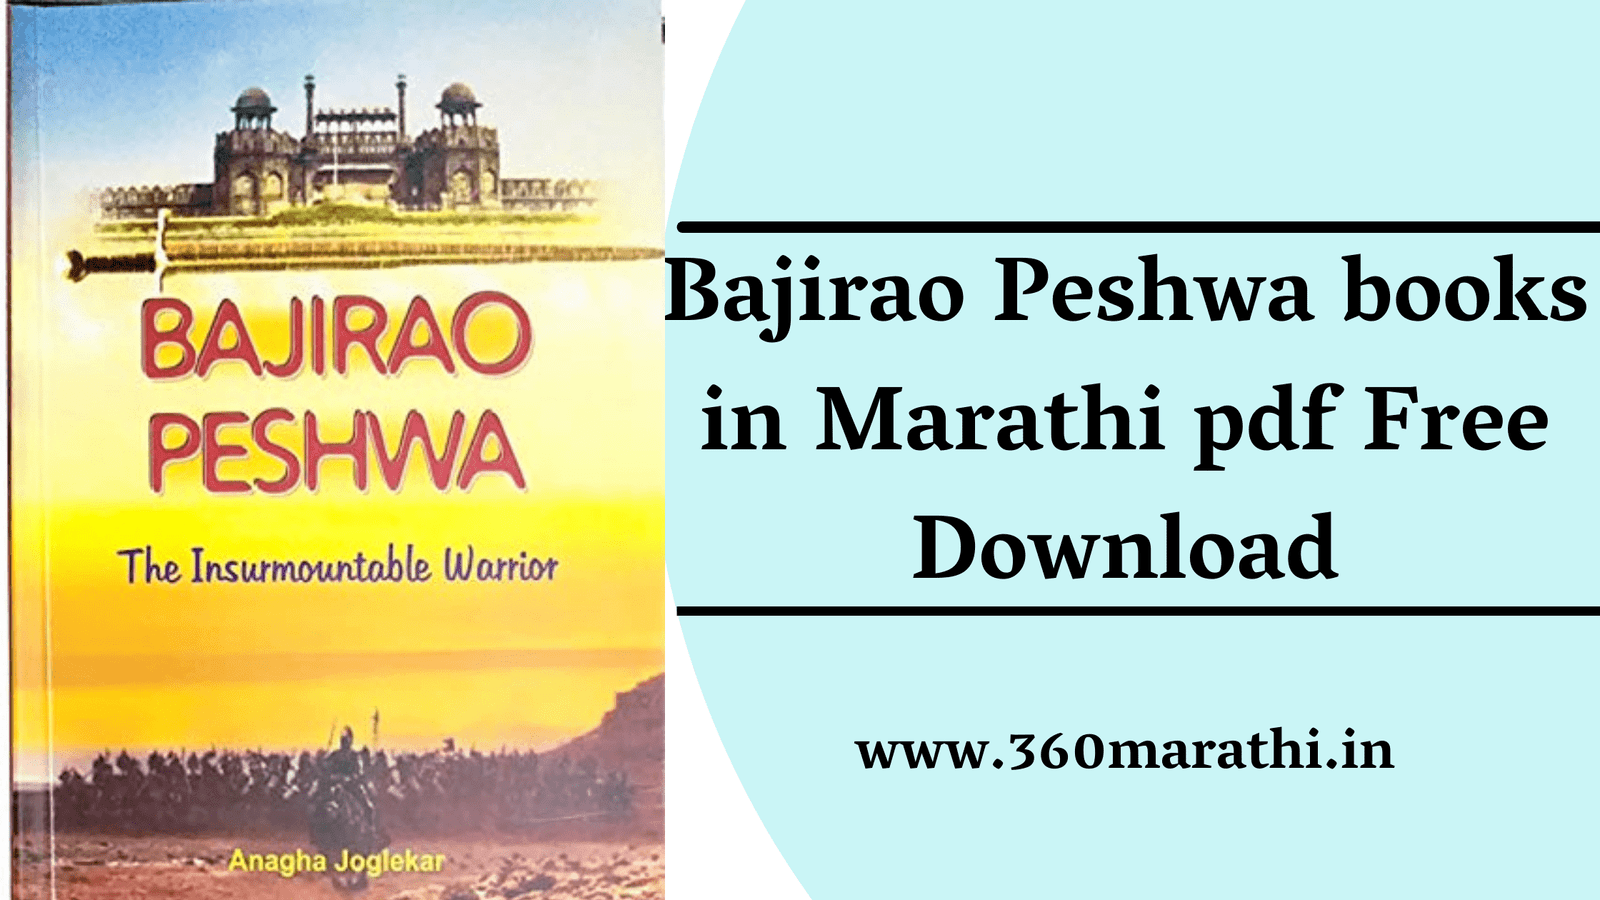 Bajirao Peshwa books in Marathi pdf Free Download